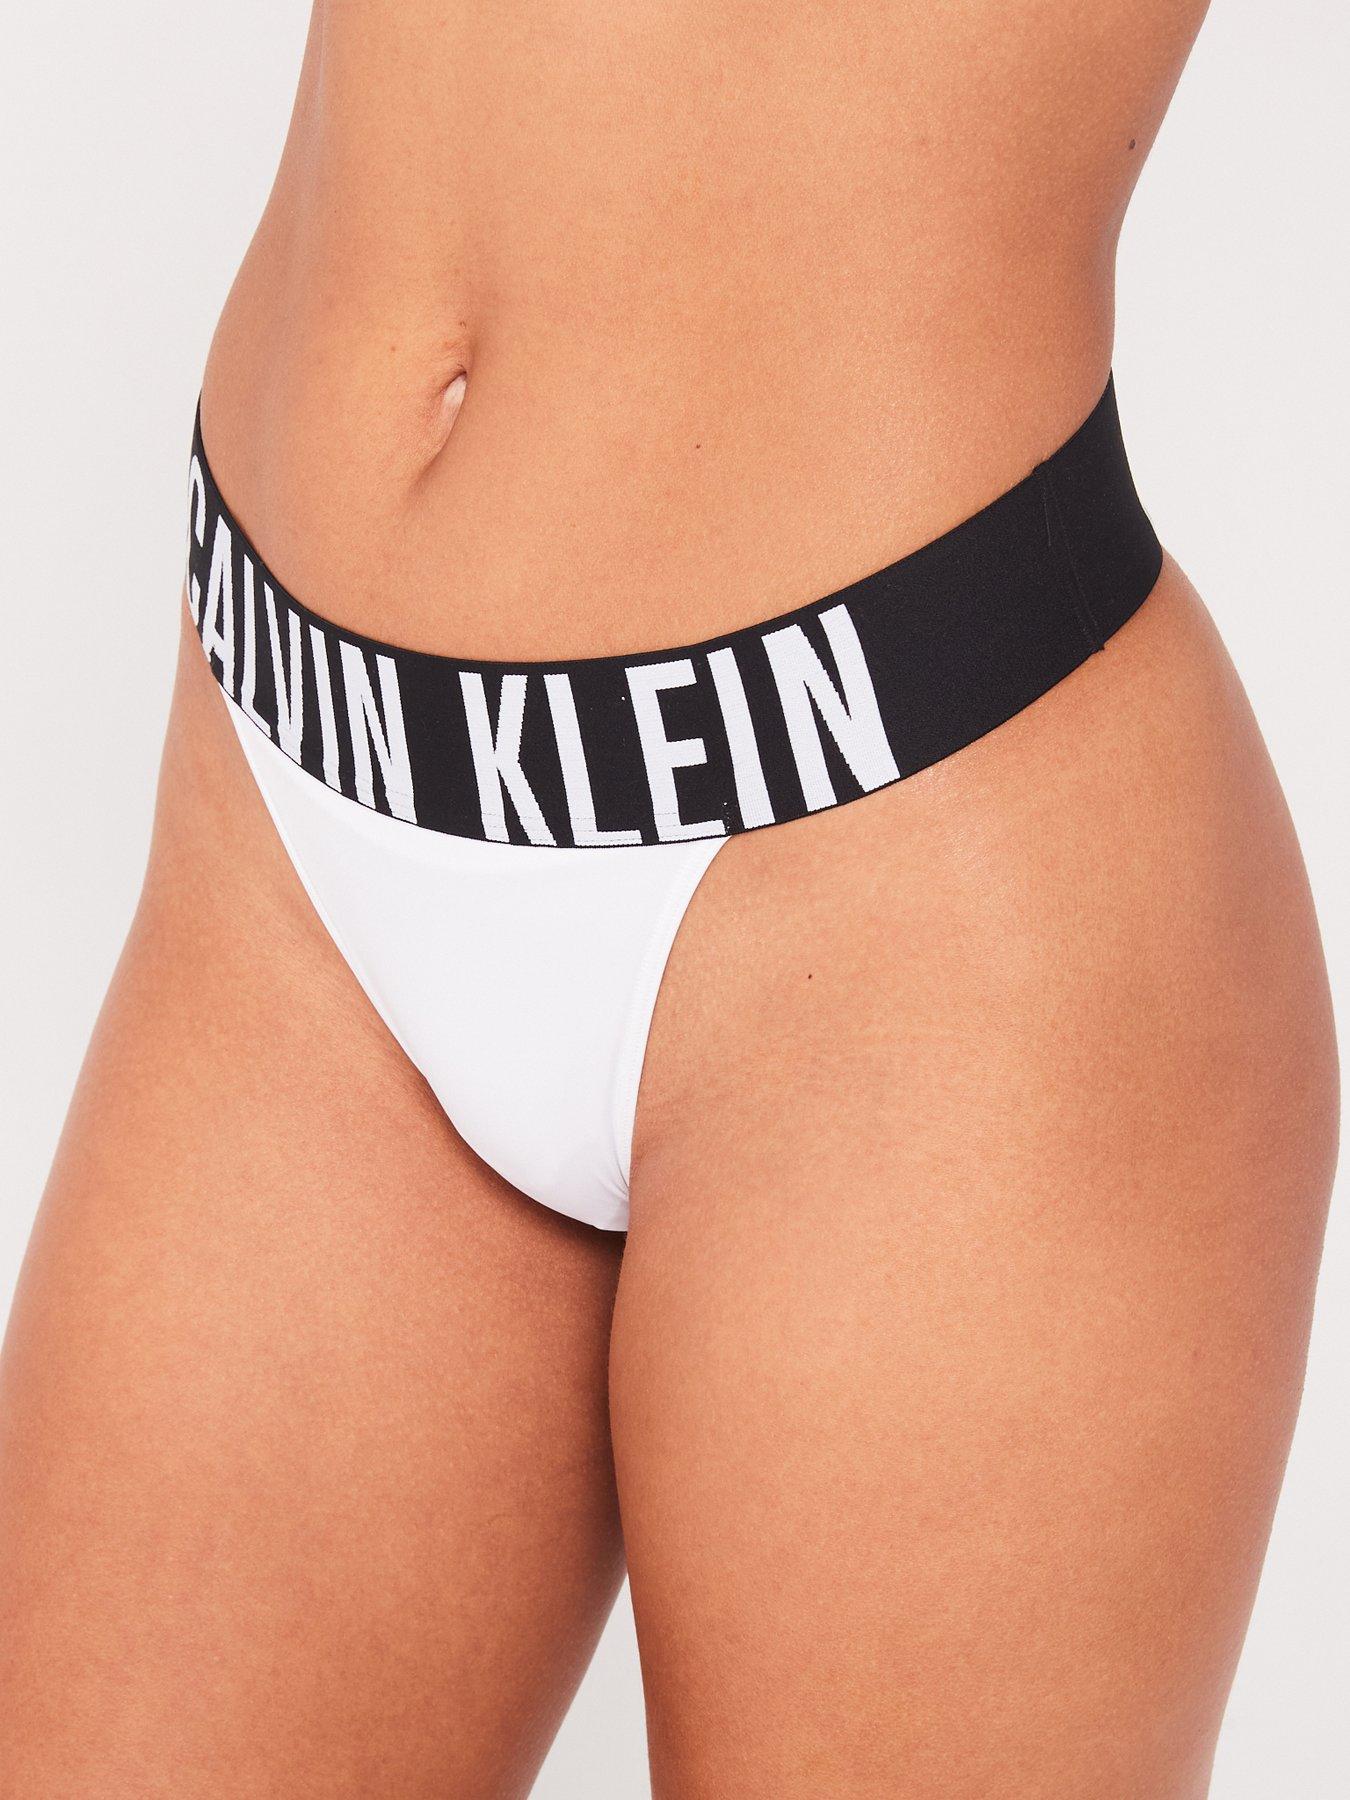 Calvin Klein Intense Power logo high leg brazilian bikini bottoms in black